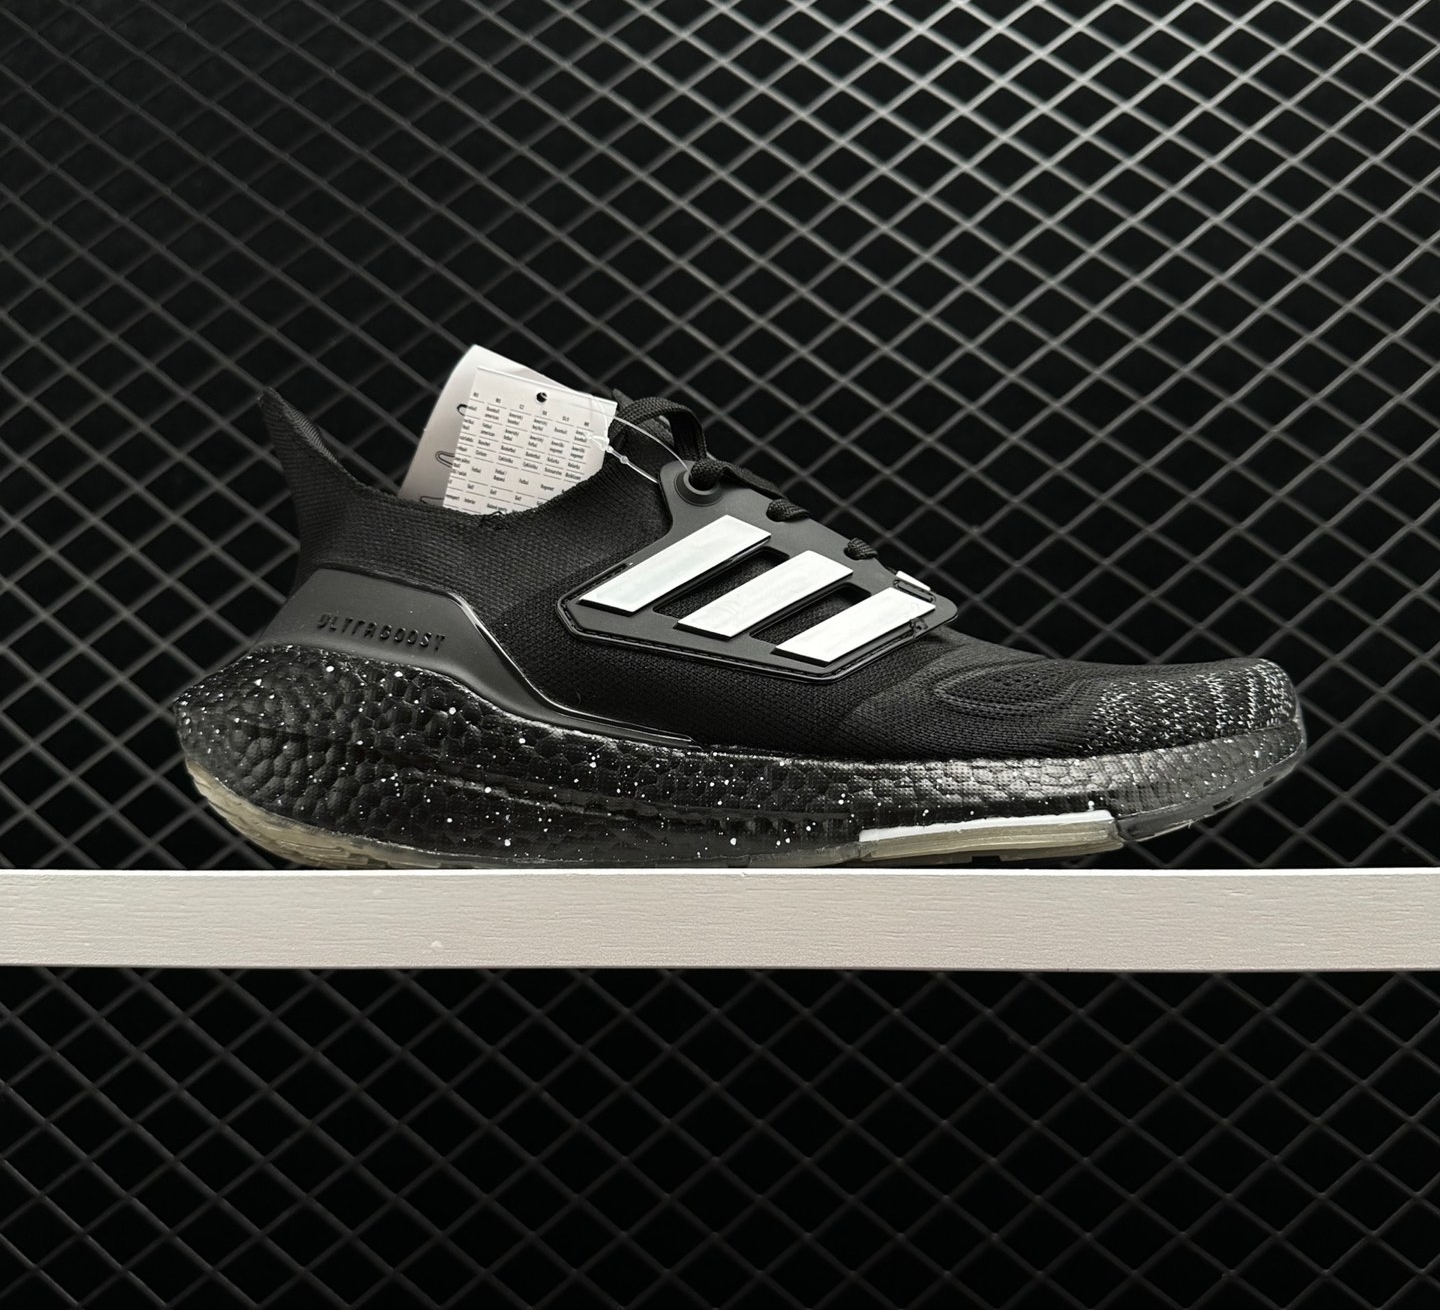 Adidas UltraBoost 22 Black White Speckled - Premium Footwear at Its Best!